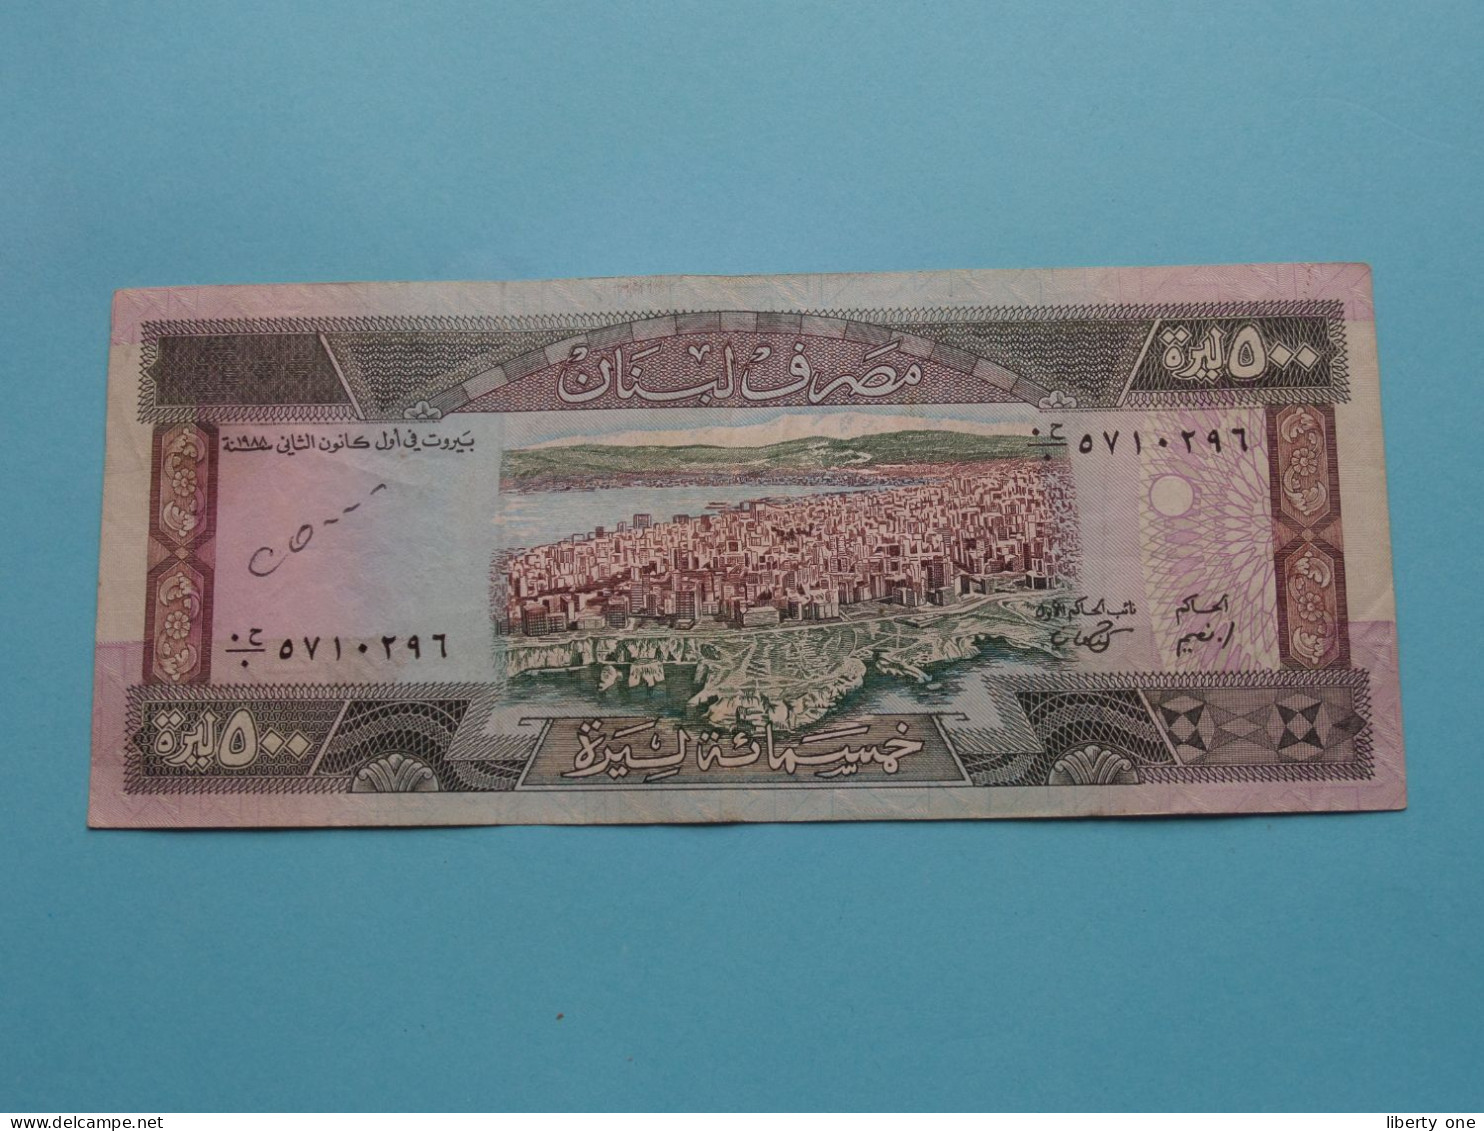 1988 - 500 Livres Mille ( Banque De Liban ) Lebanon 1988 ( For Grade, Please See SCANS ) Used ! - Lebanon